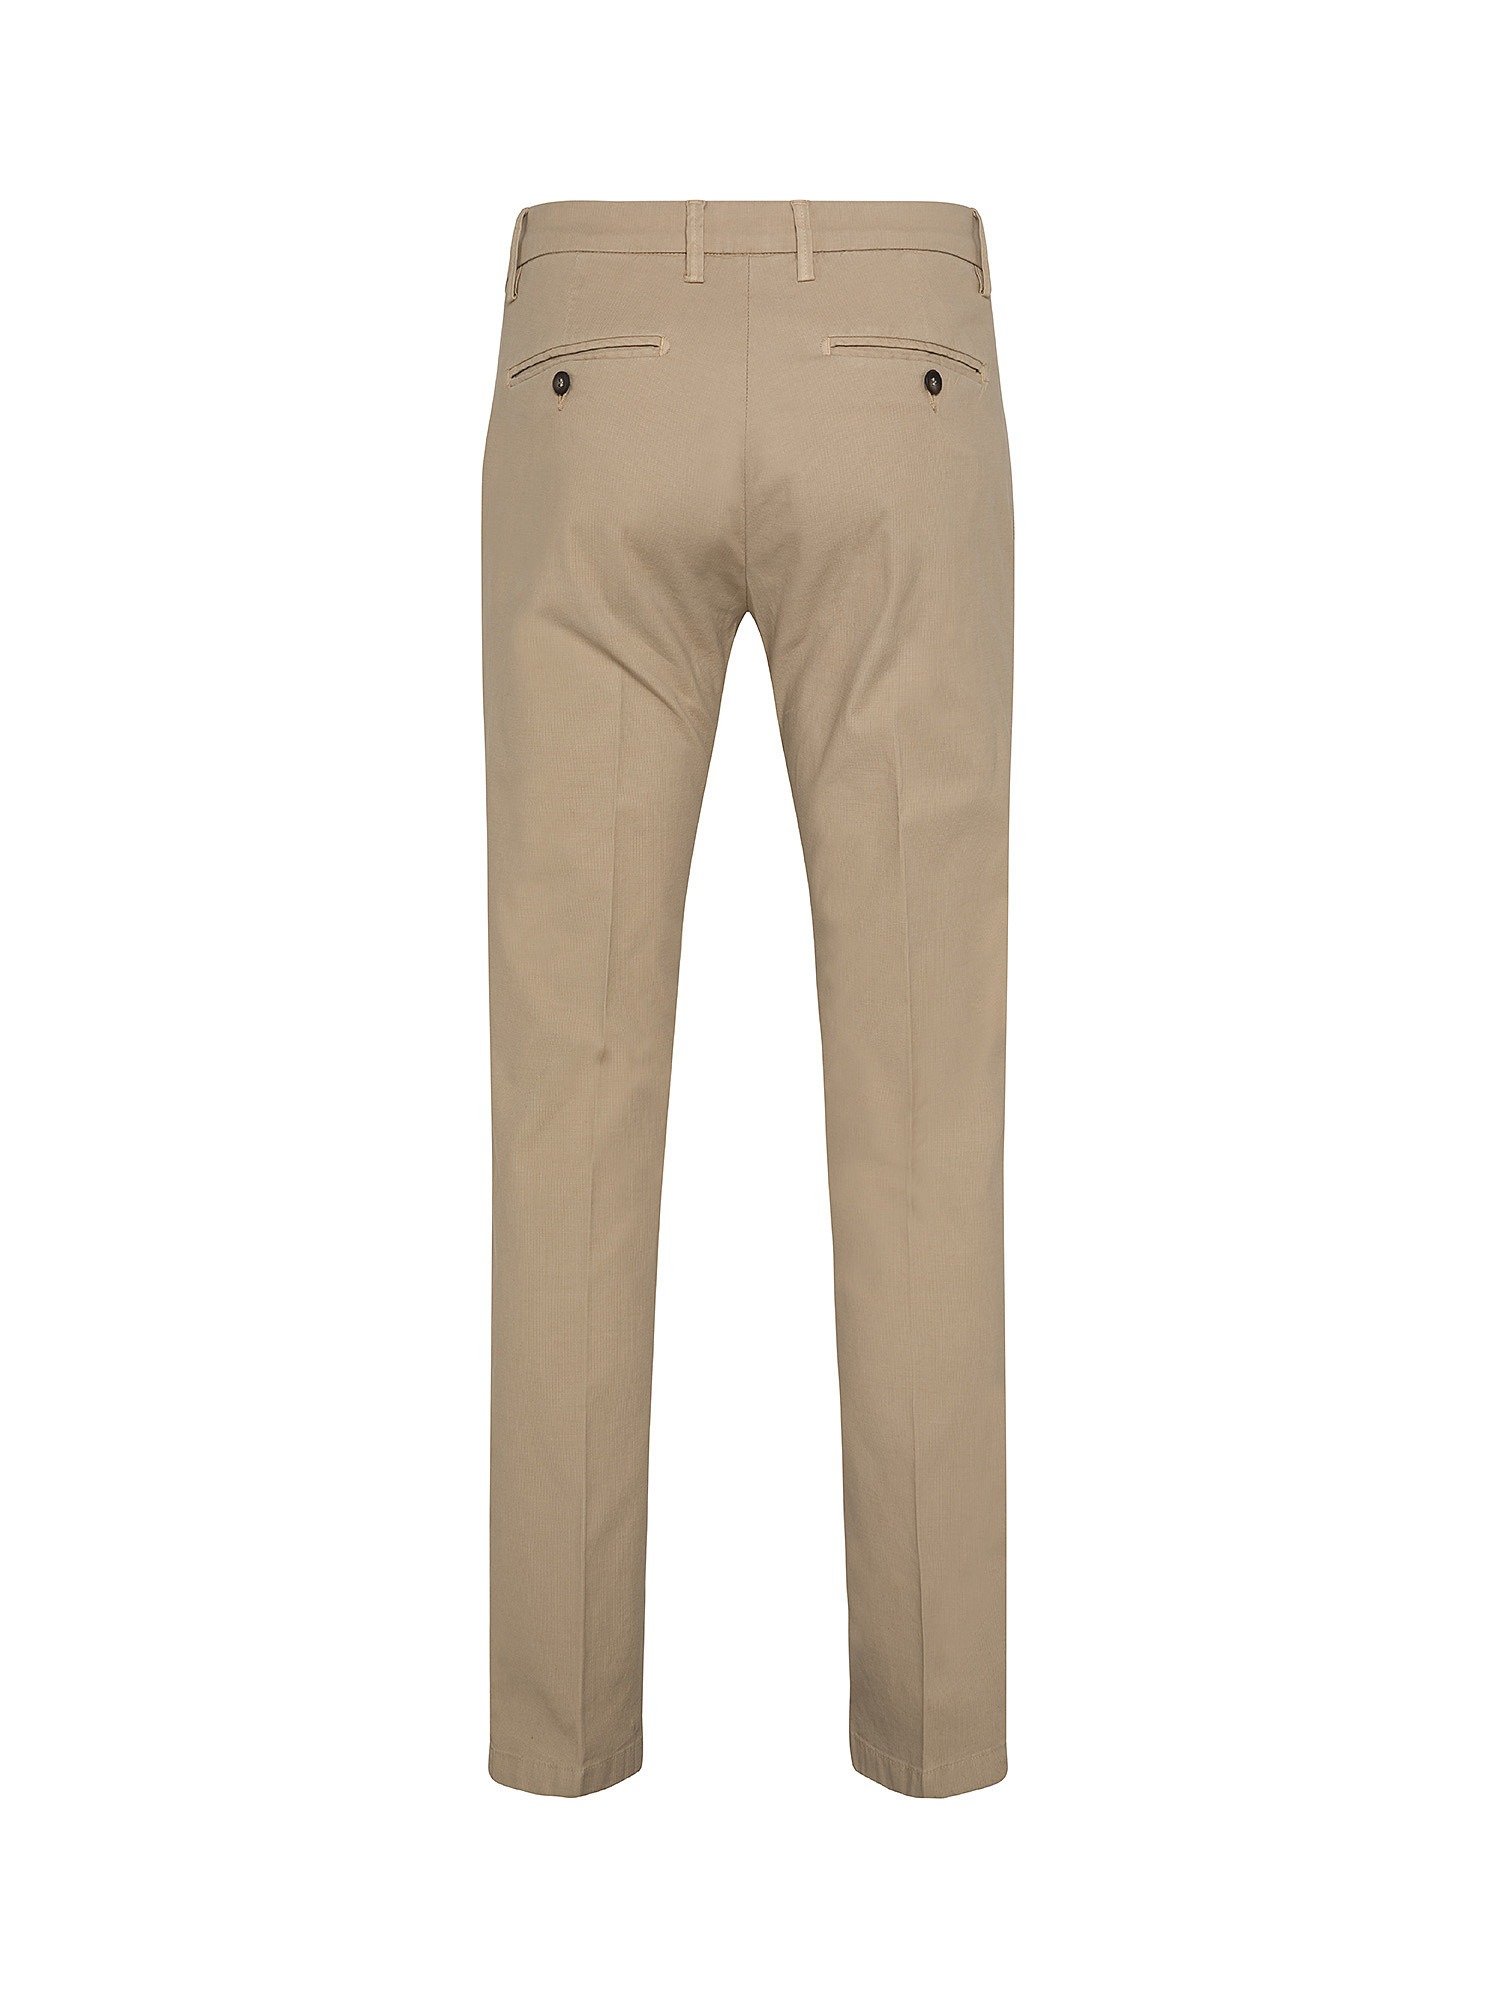 Pantalone chino, Beige, large image number 1